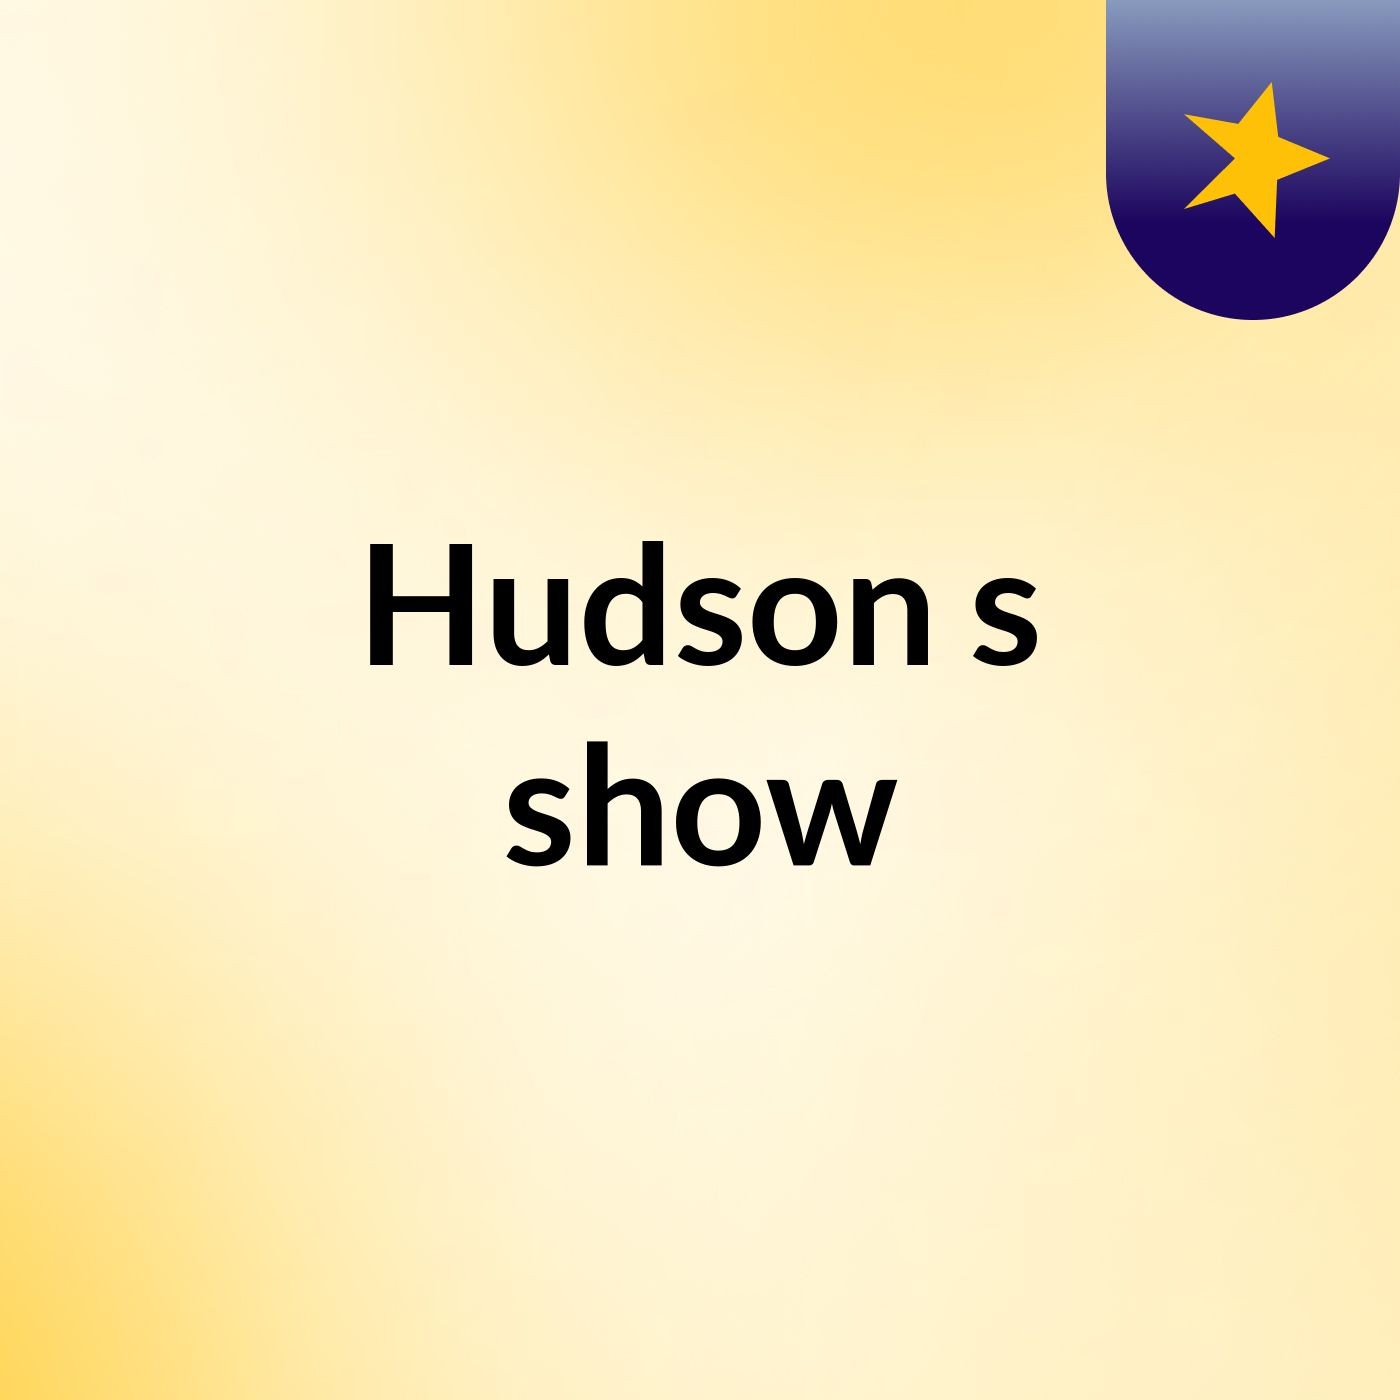 Hudson's show